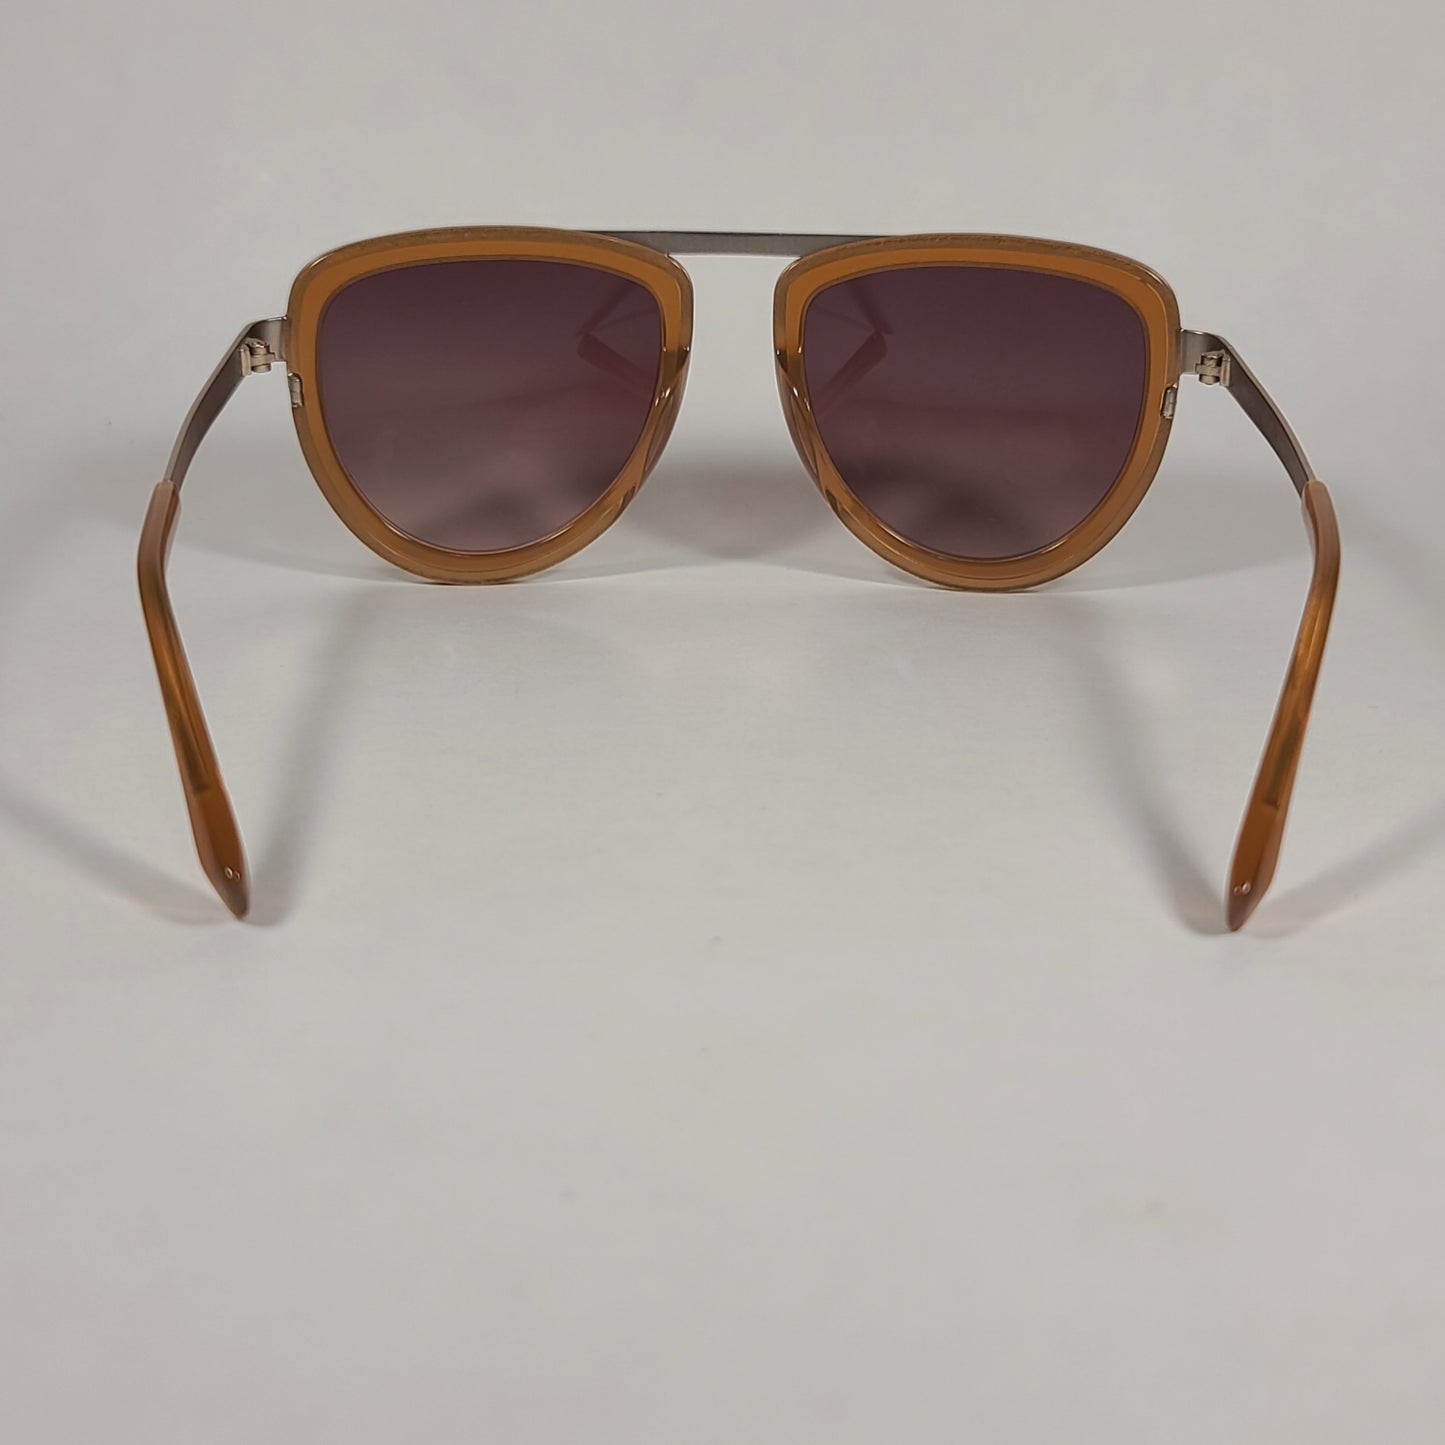 Kendall + Kylie Jones Aviator Sunglasses Shiny Crystal and Light Brown With Gradient Lens KK5009D 207 - Sunglasses